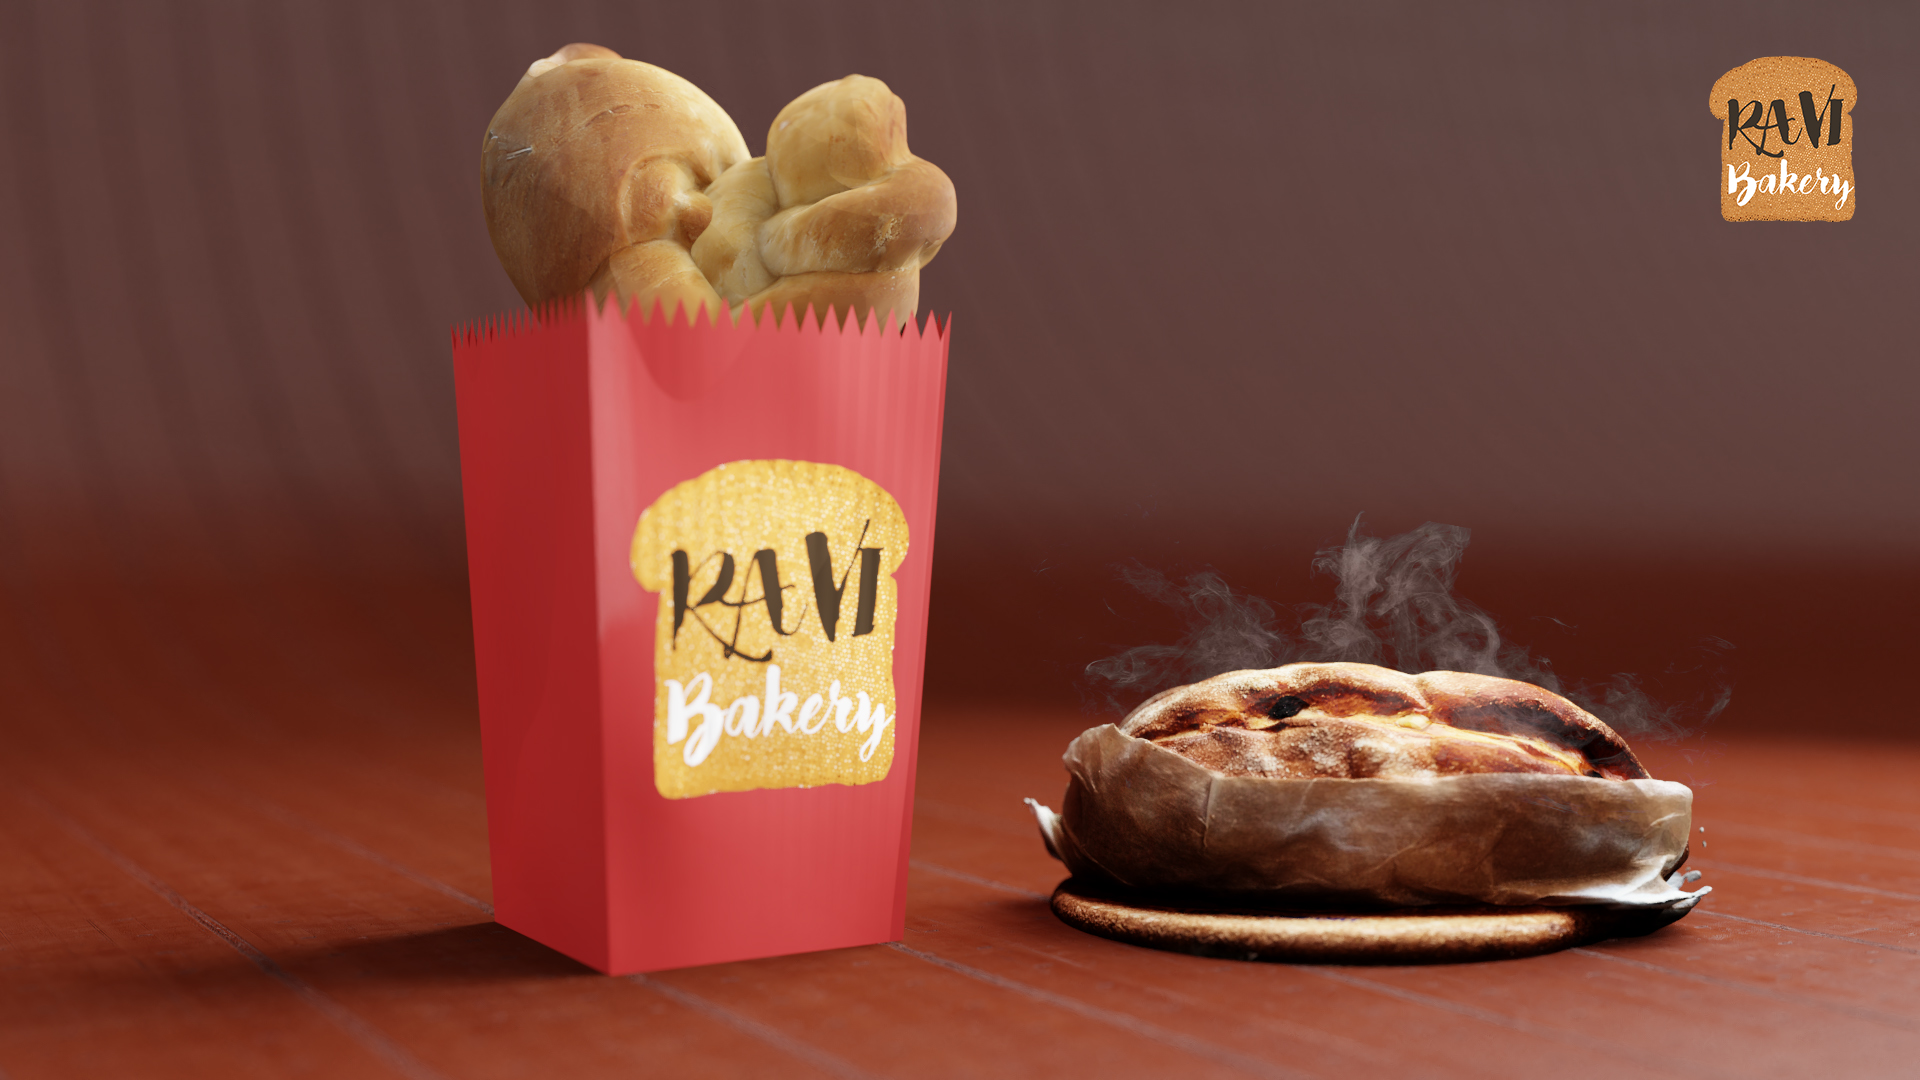 Ravi bakery